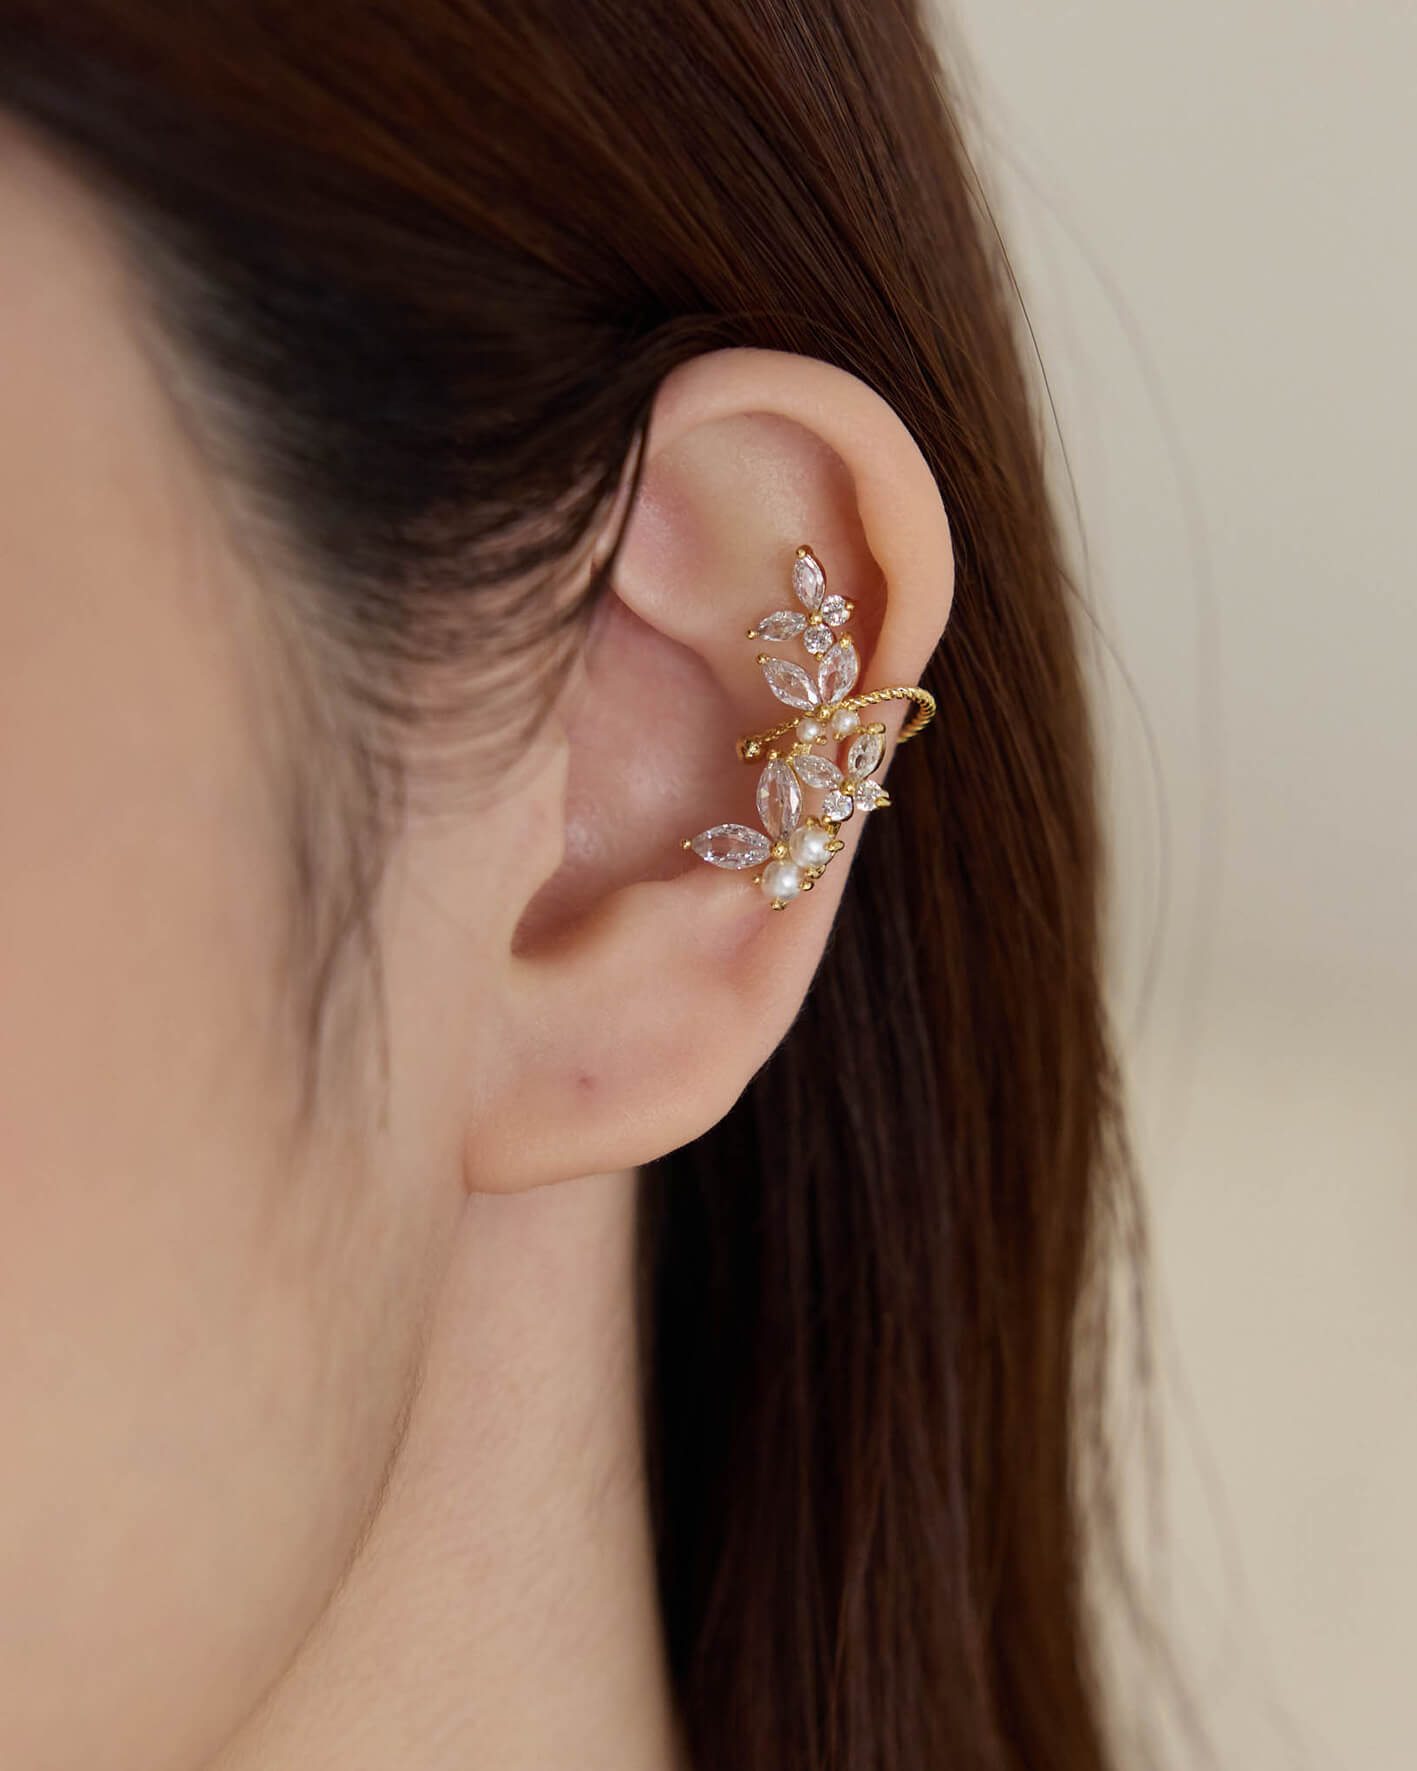 Eco安珂,韓國飾品,韓國耳環,韓國耳骨夾,韓國耳扣,耳夾式耳環,耳骨夾,耳扣,耳骨耳環,耳窩耳環,無耳洞耳環